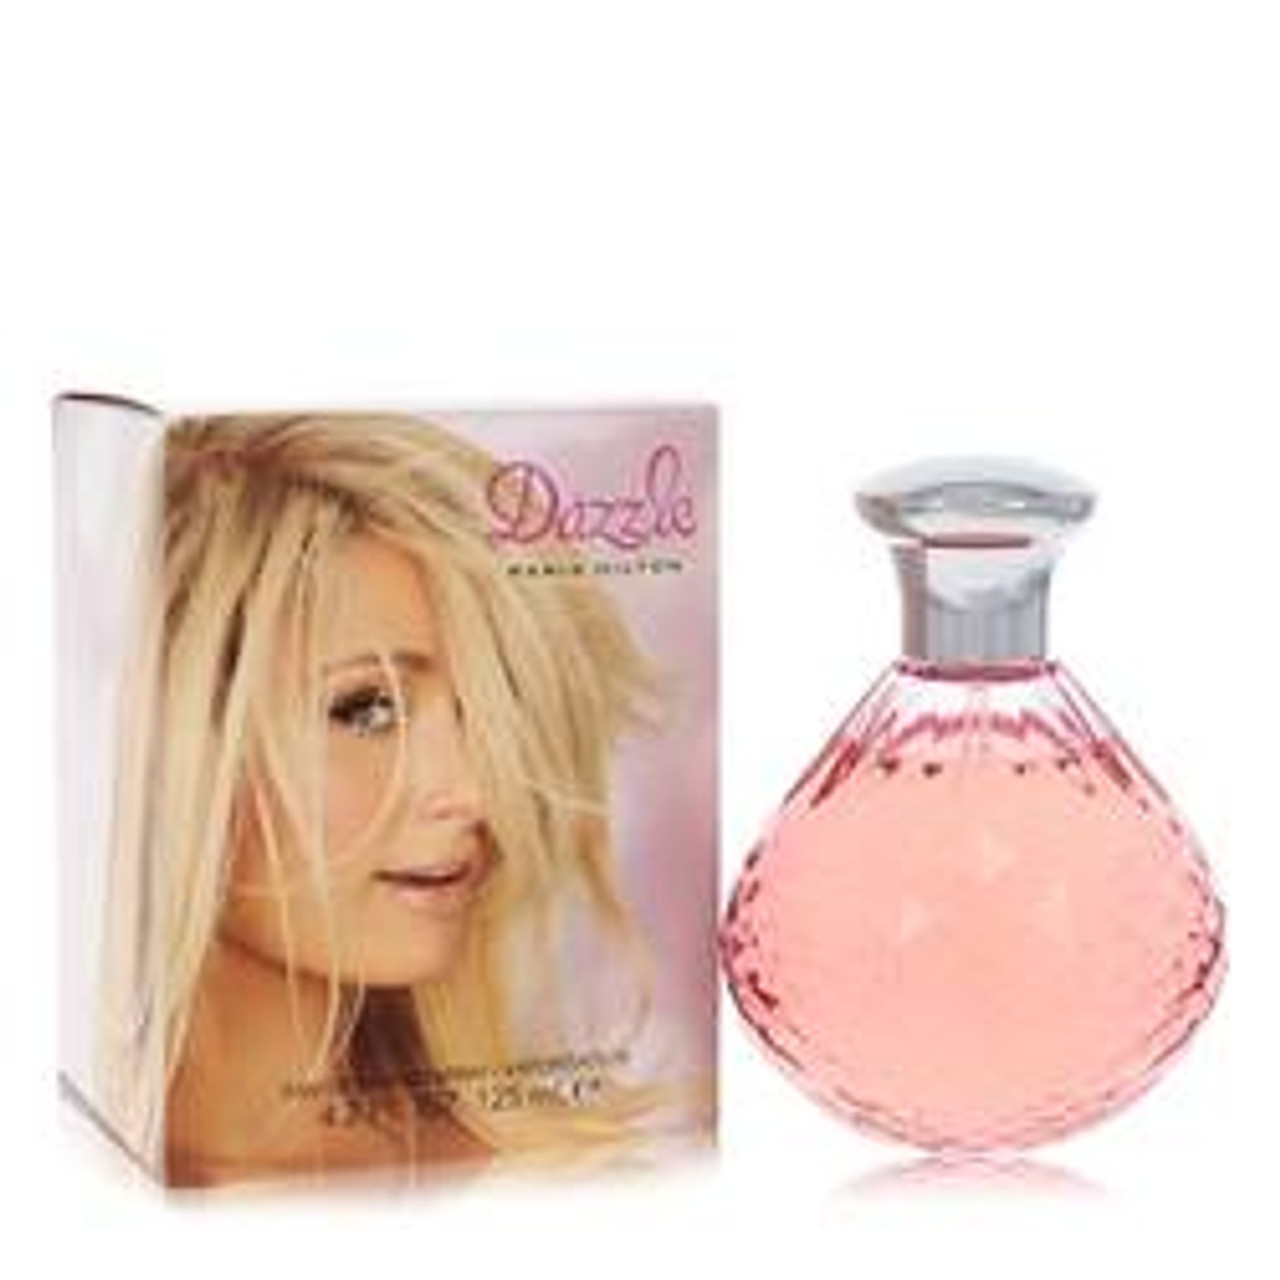 Dazzle Perfume By Paris Hilton Eau De Parfum Spray 4.2 oz for Women - [From 79.50 - Choose pk Qty ] - *Ships from Miami